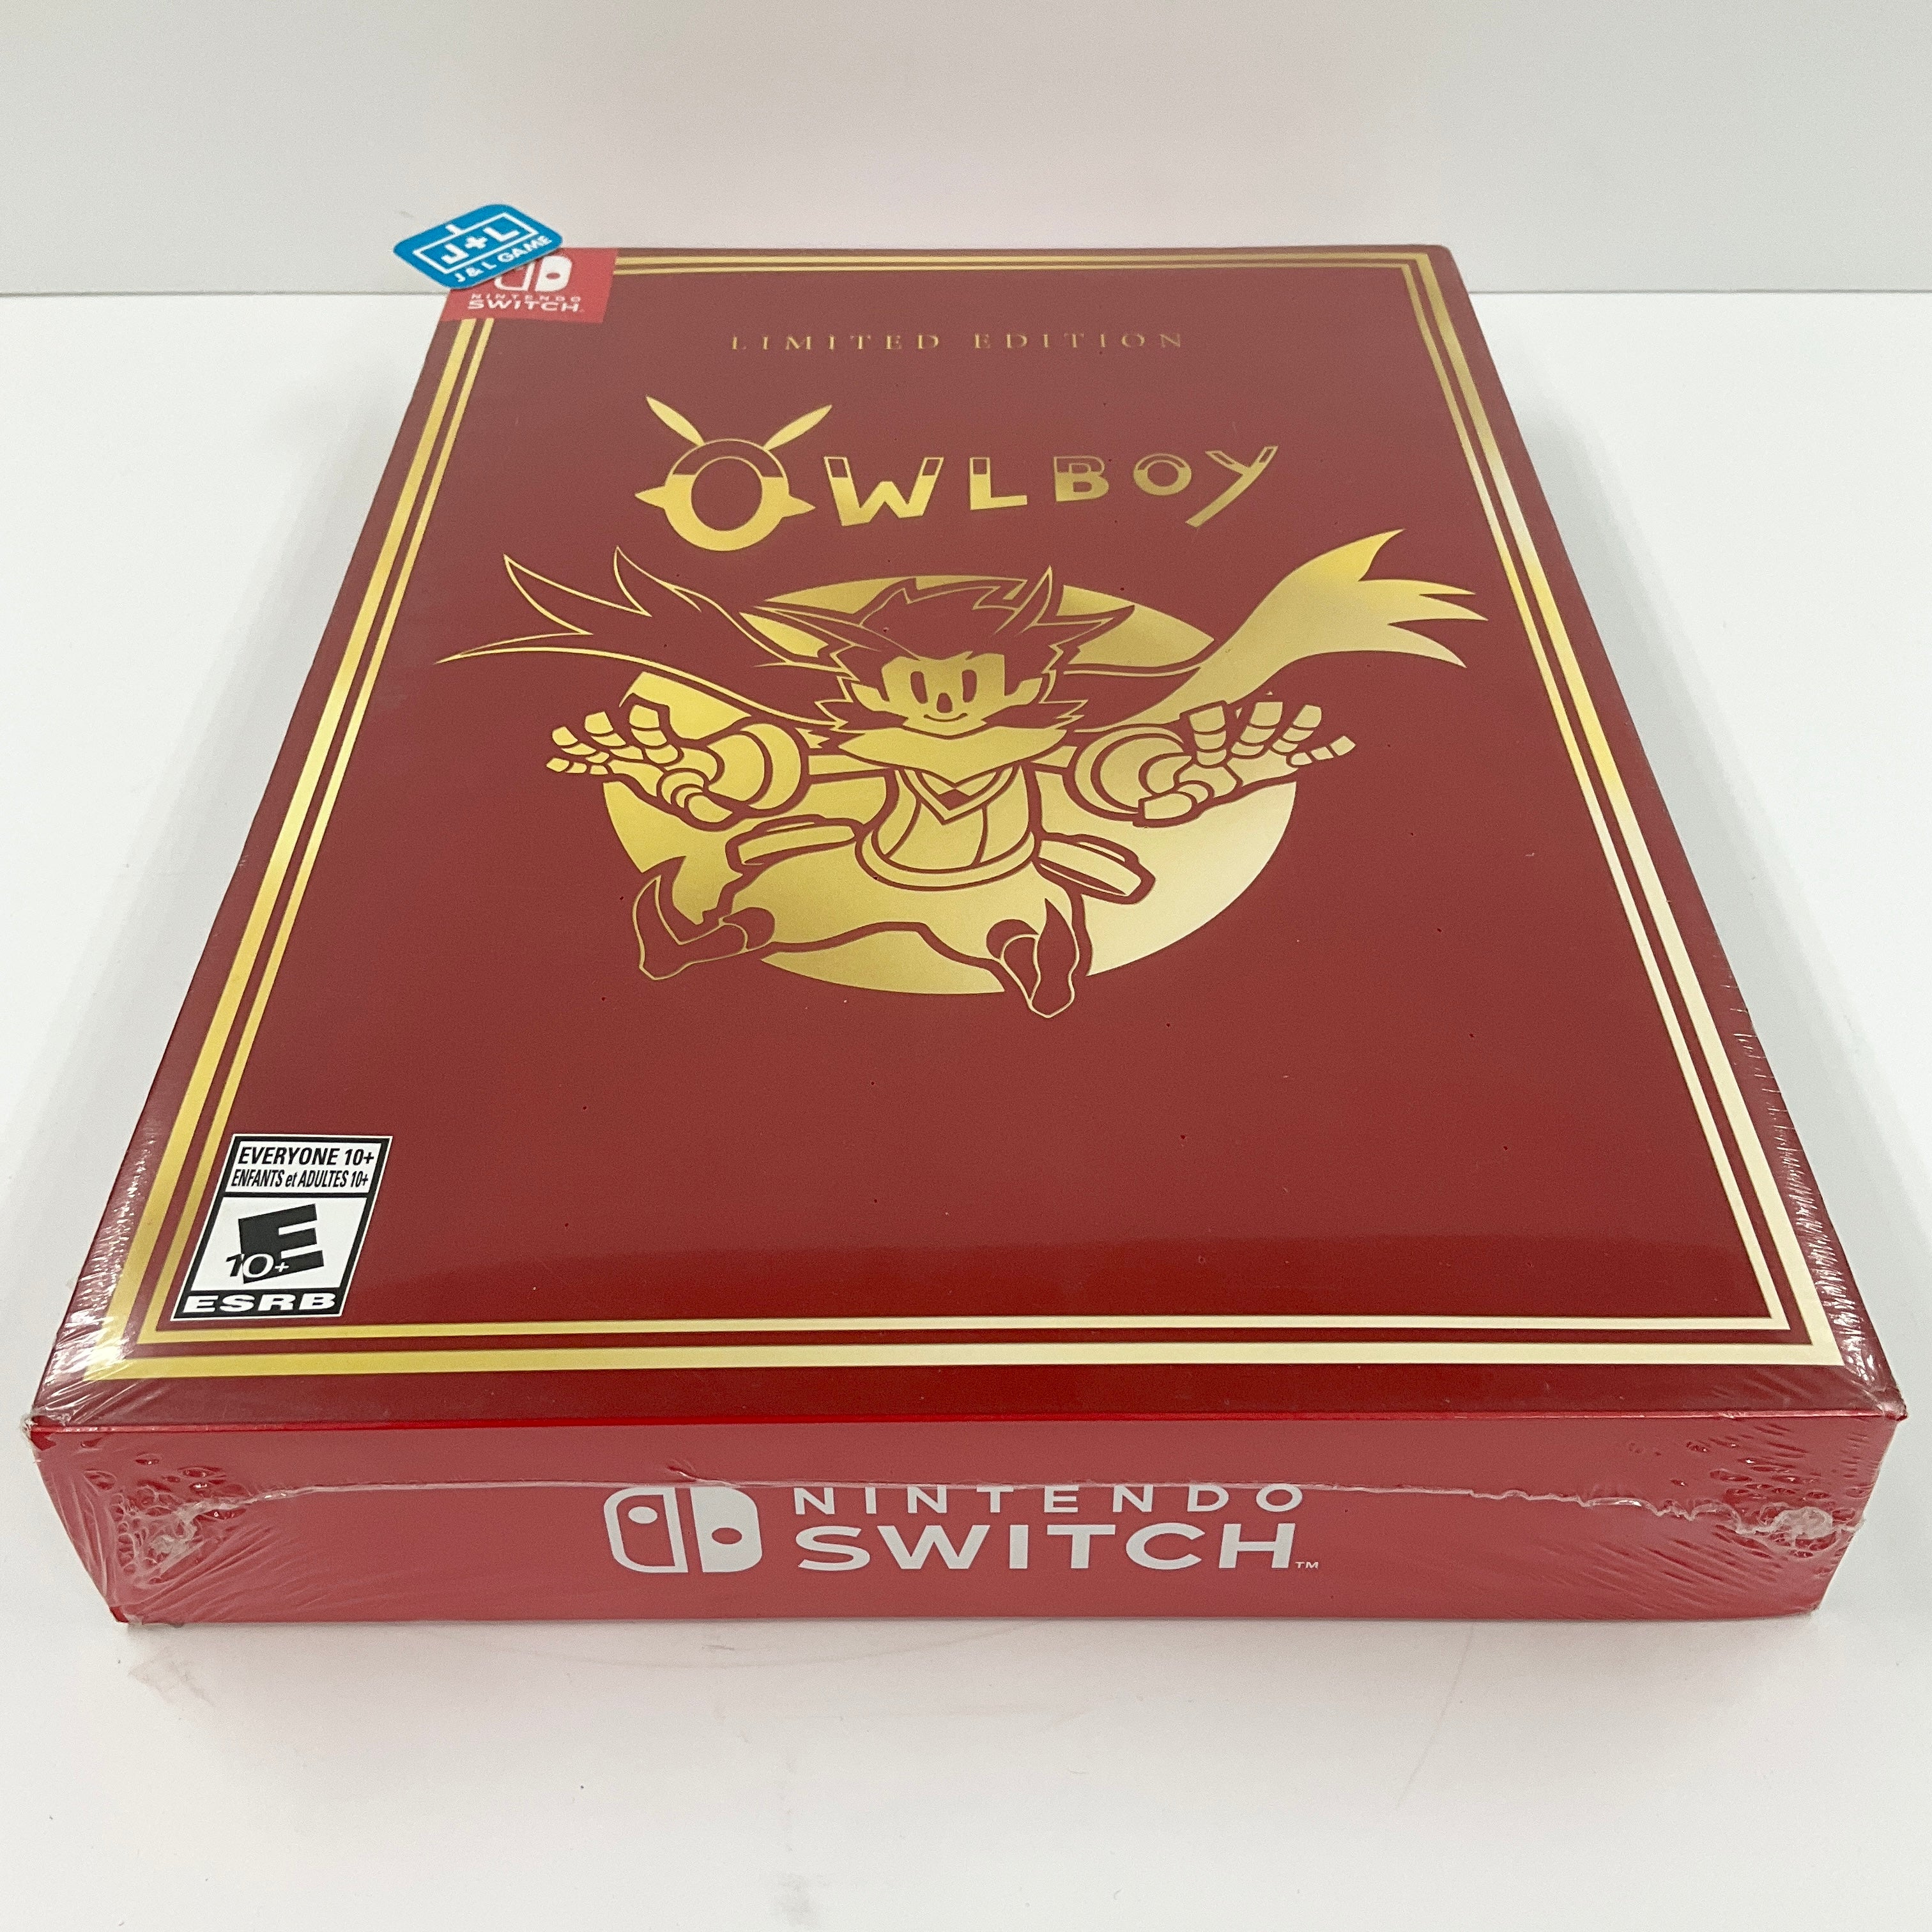 Owlboy (Limited Edition) - (NSW) Nintendo Switch Video Games Soedesco   